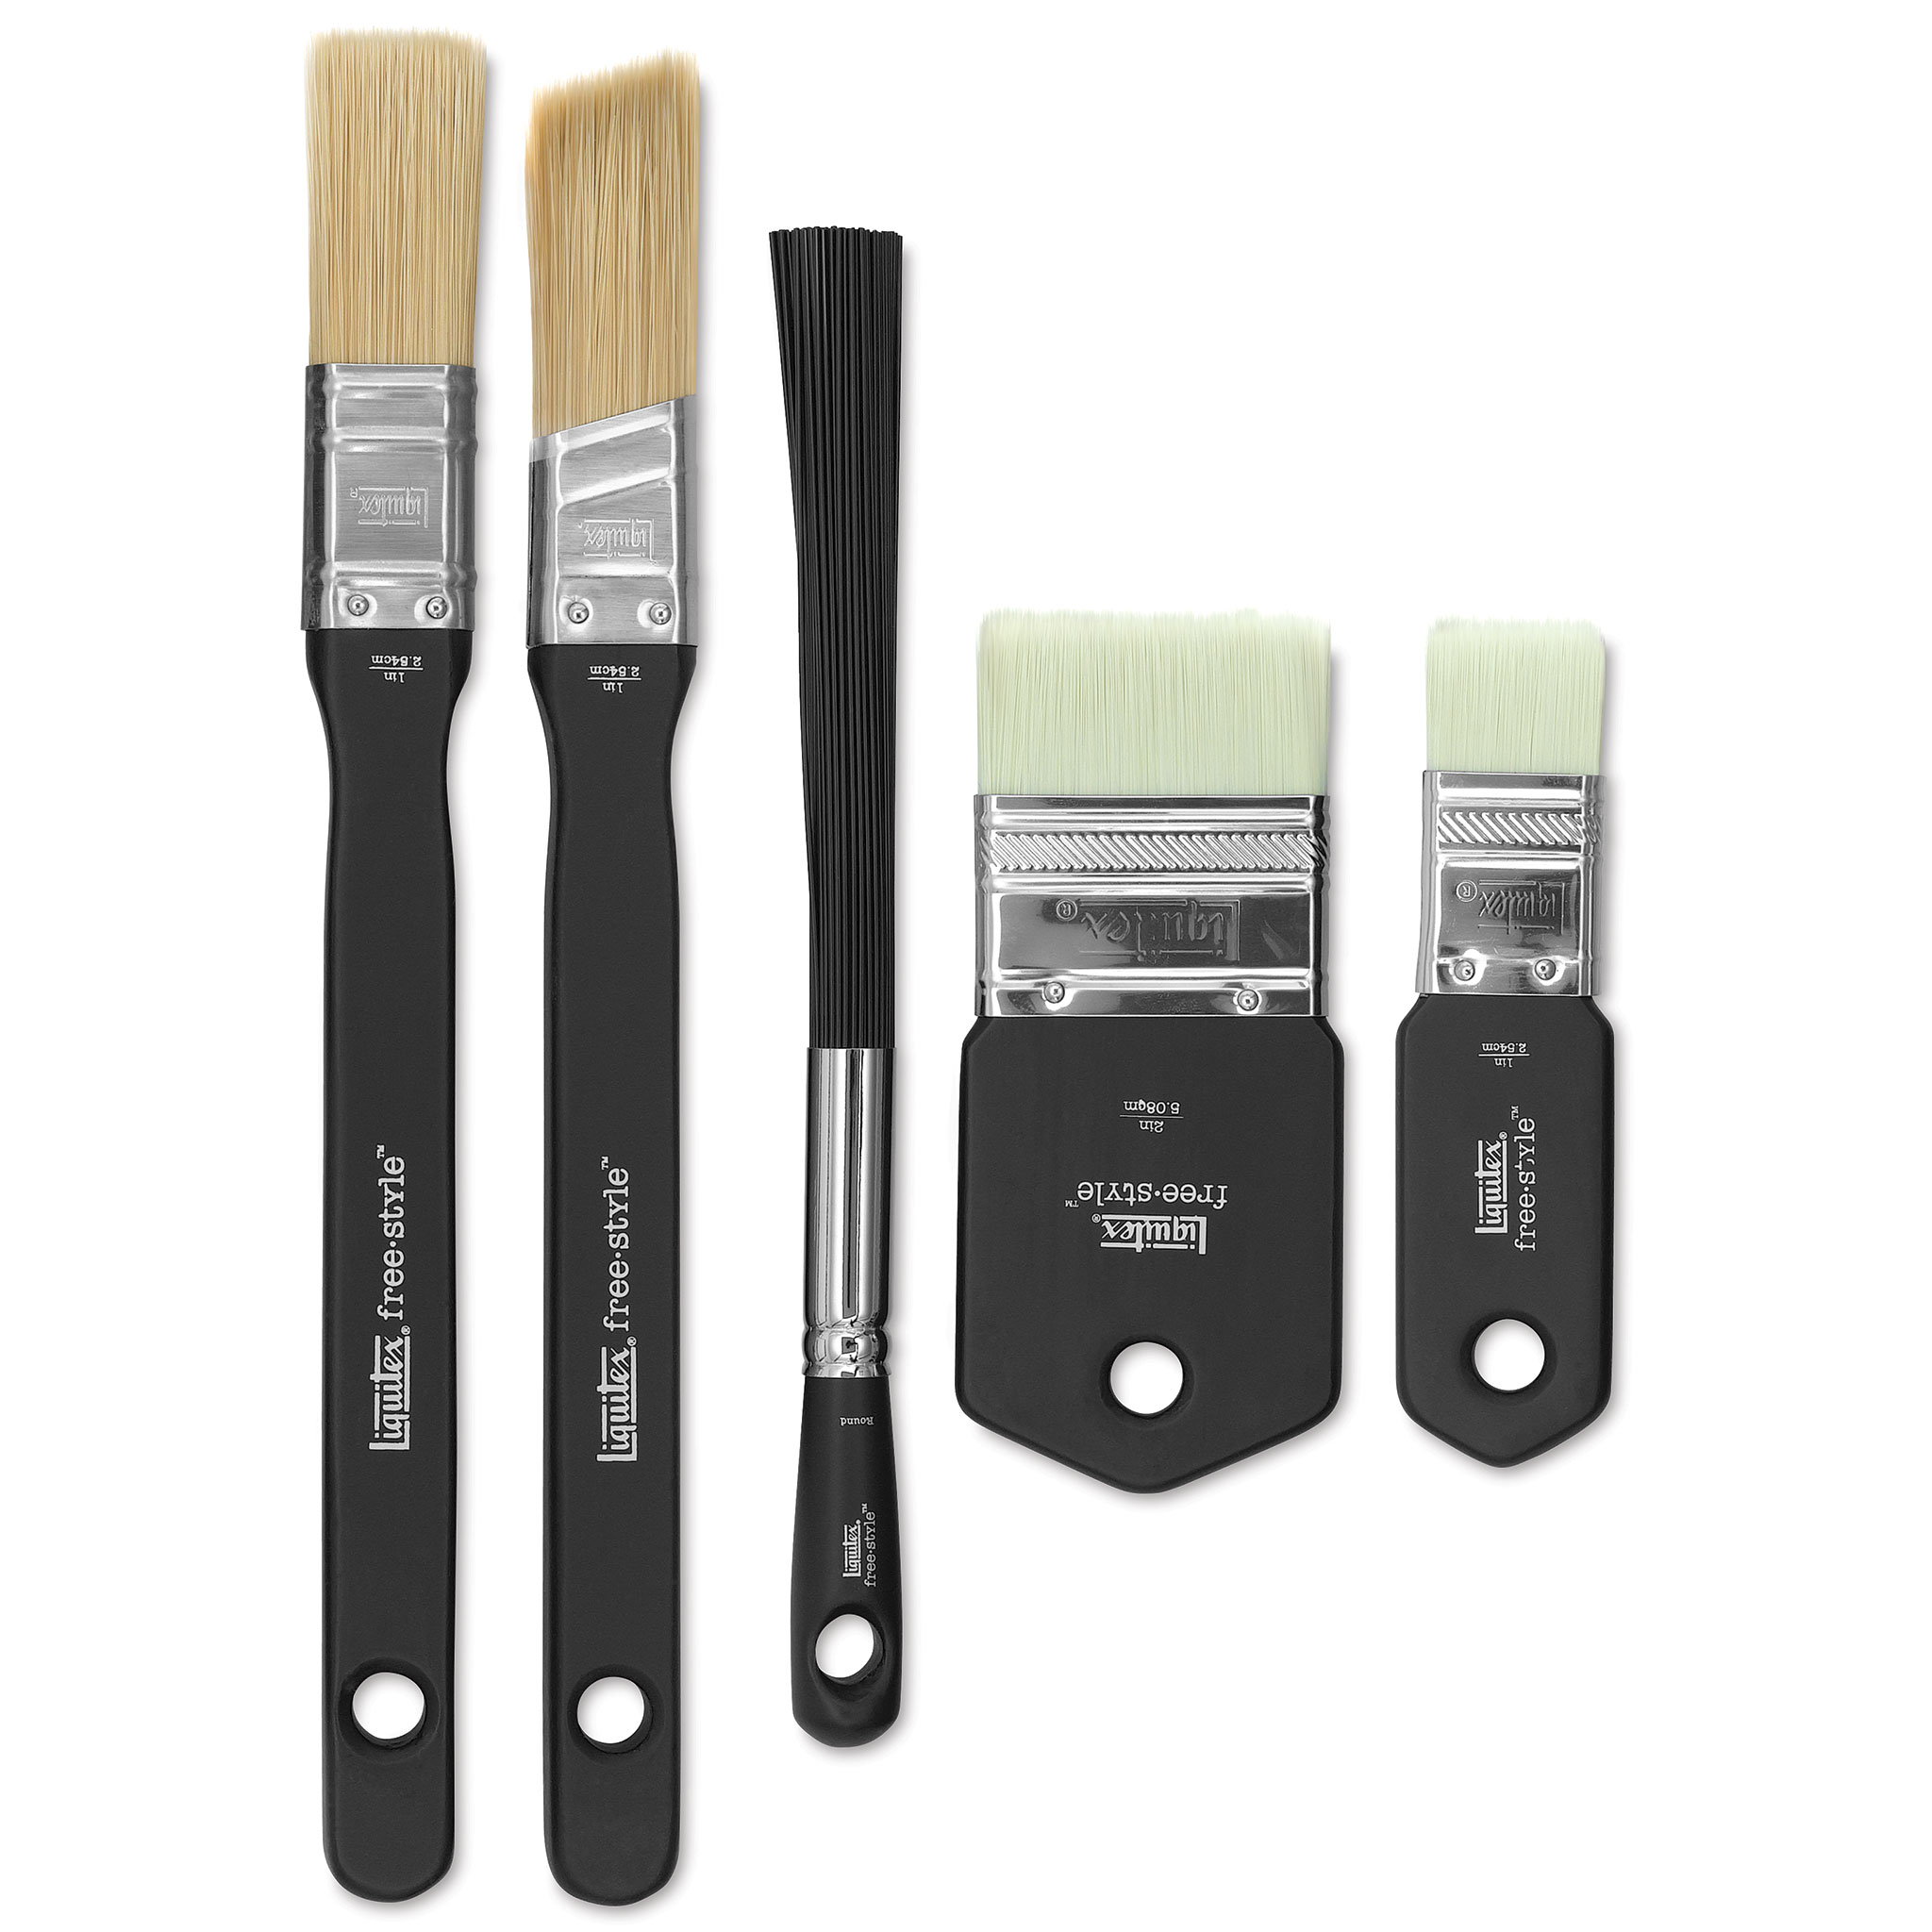 Liquitex Freestyle Large Scale Brush, Long Handle, Broad Flat/Varnish, 1 inch